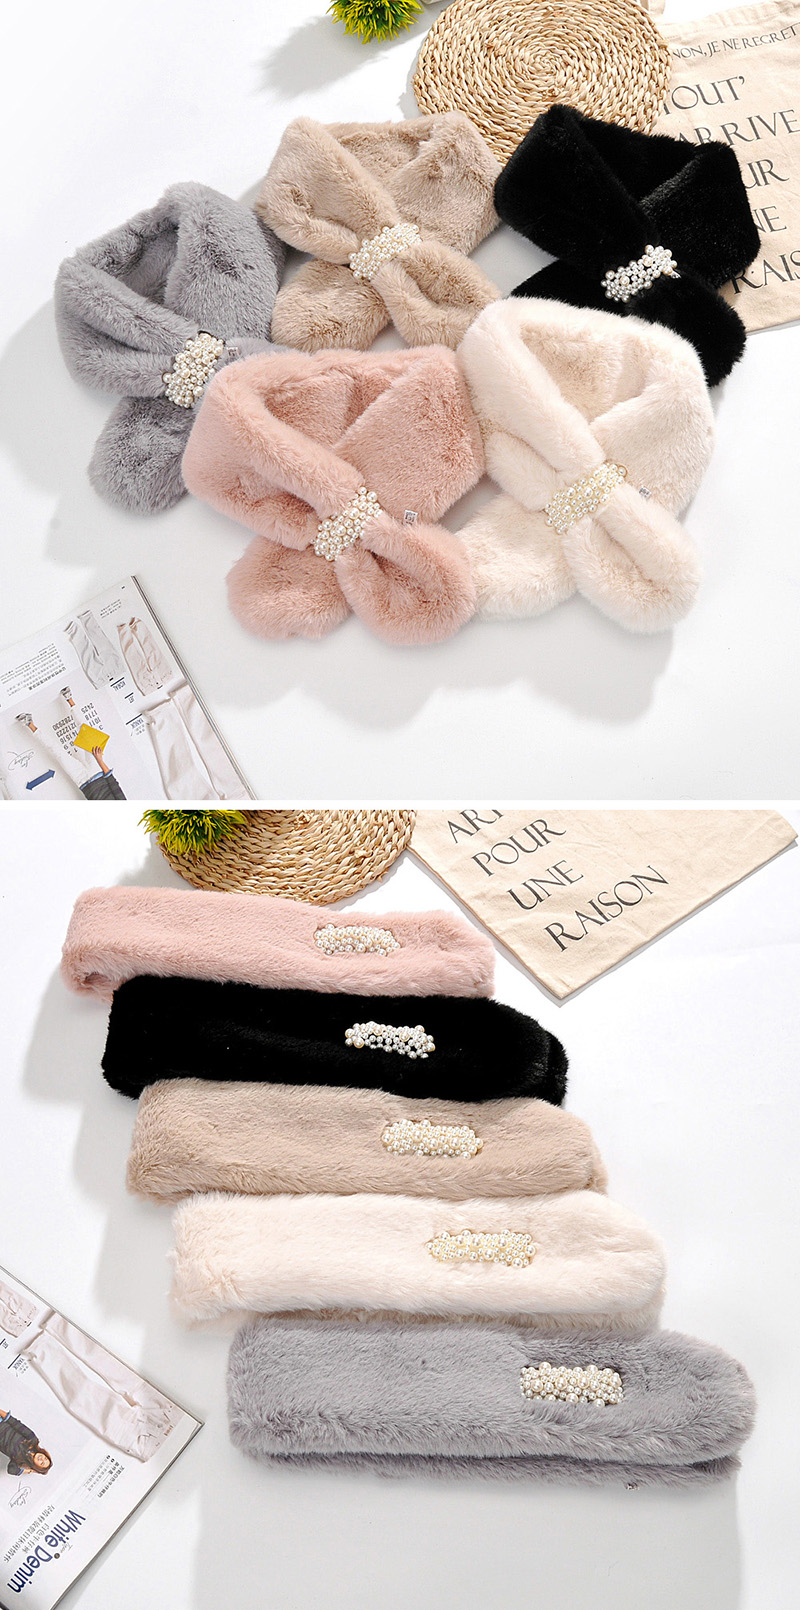 Fashion Creamy-white Bead-like Rabbit Fur Collar,knitting Wool Scaves